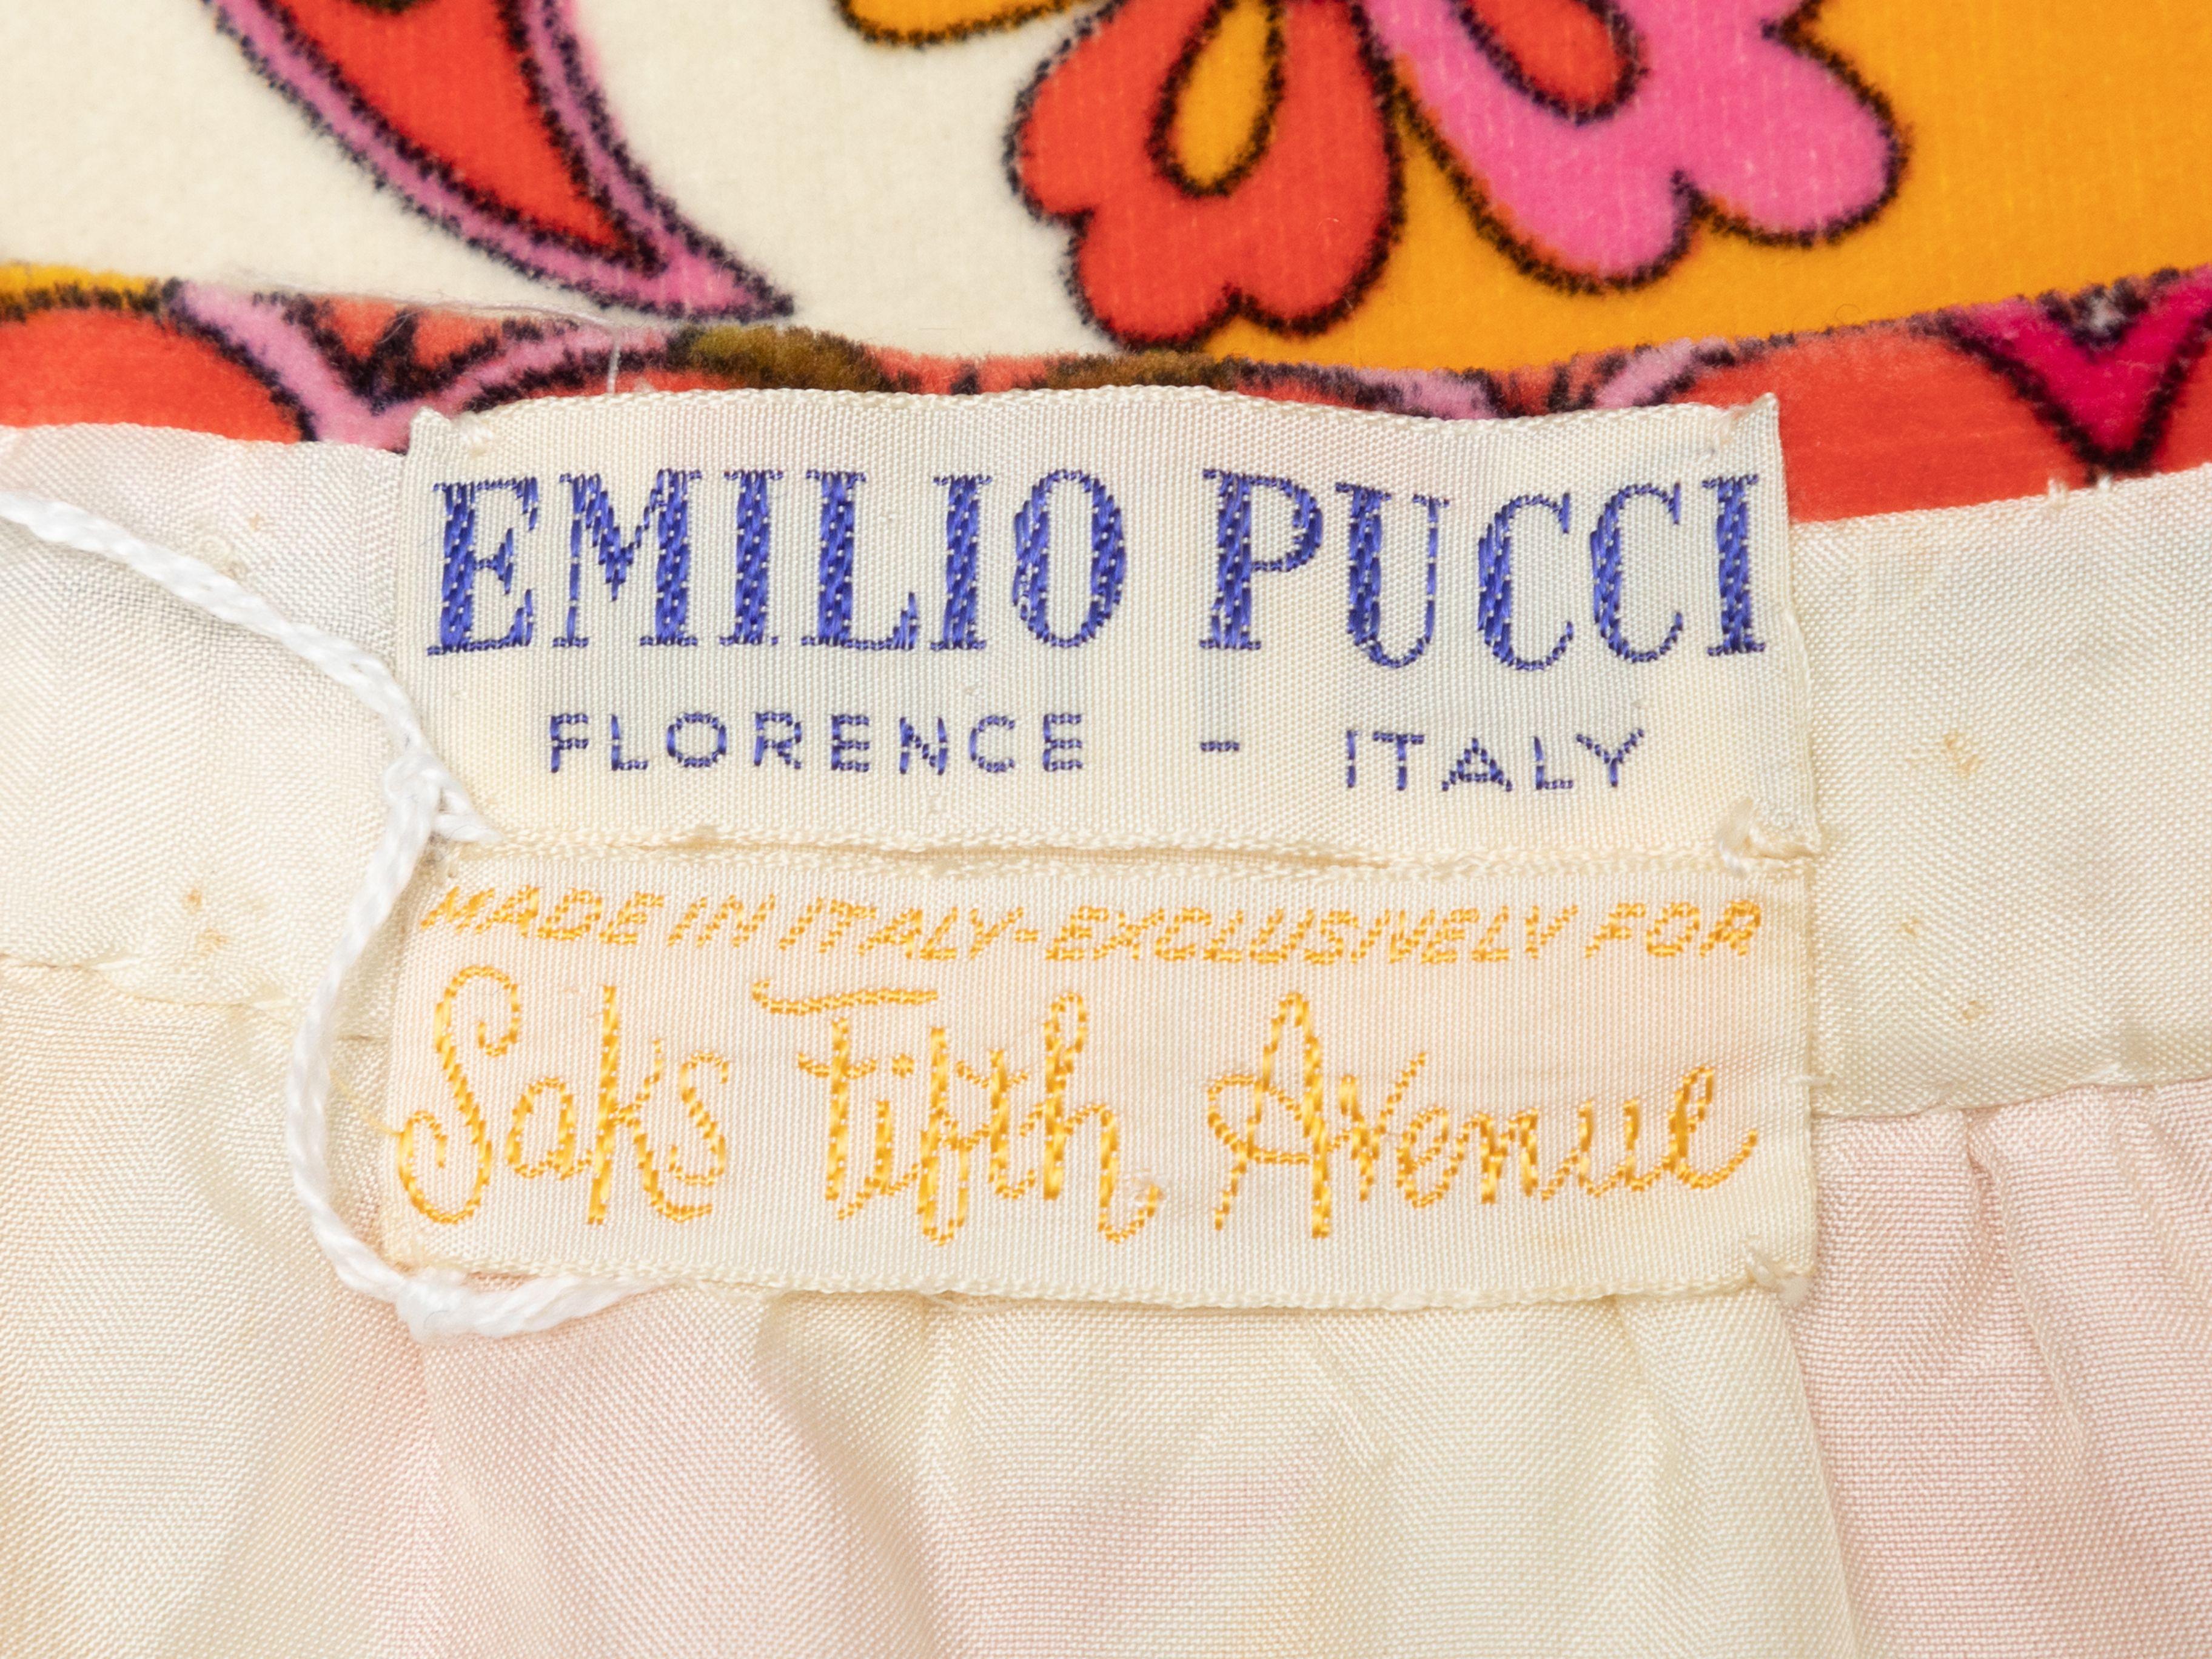 Product Details: Vintage orange and multicolor floral print velvet mini skirt by Emilio Pucci. Circa 1960s. Side closure. 26